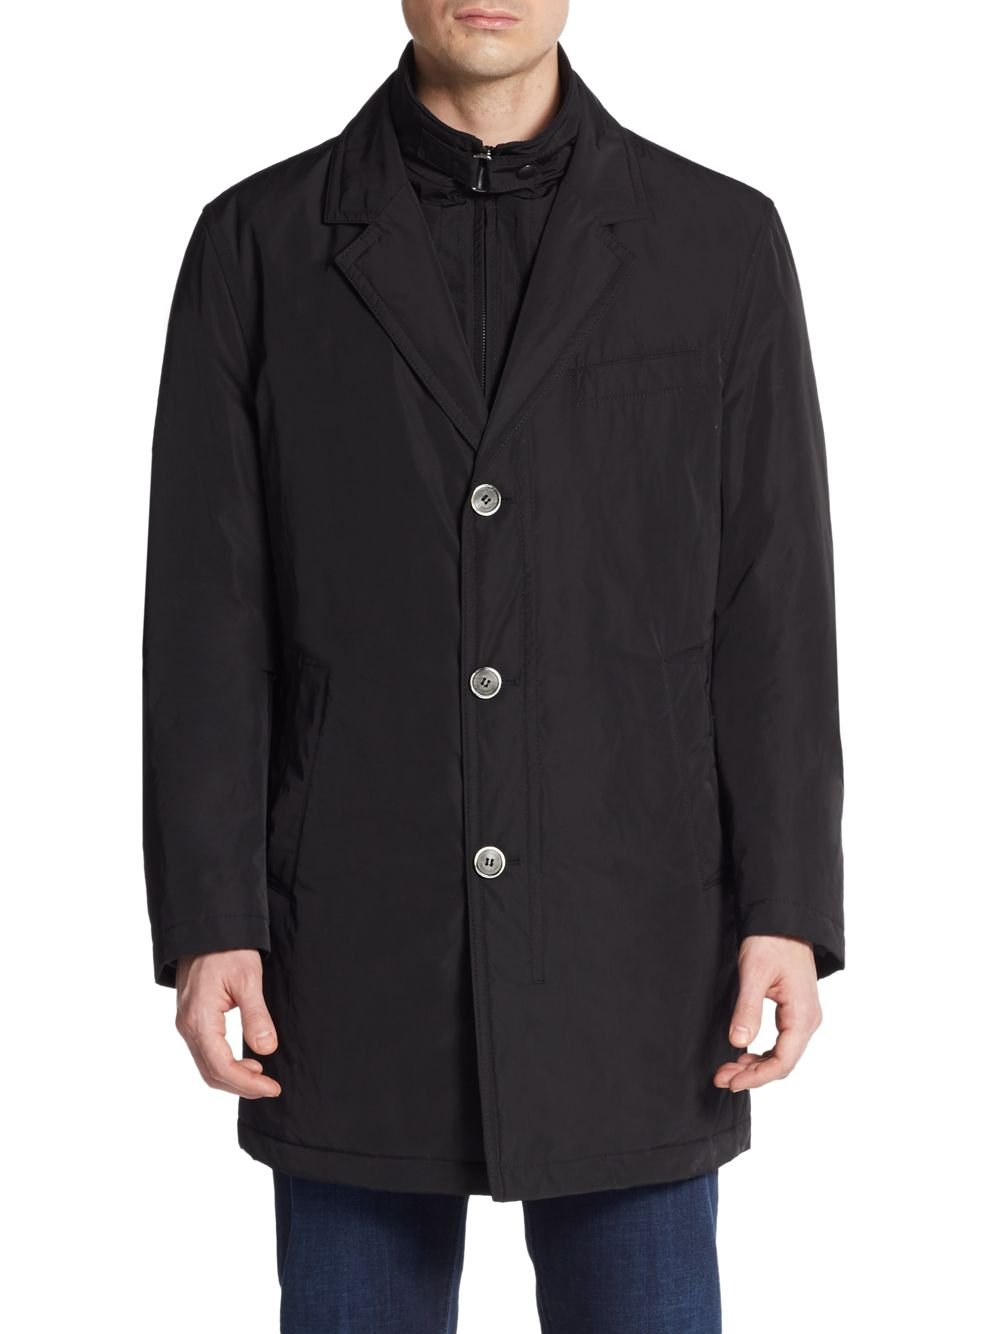 Corneliani Caban Coat in Black for Men - Lyst